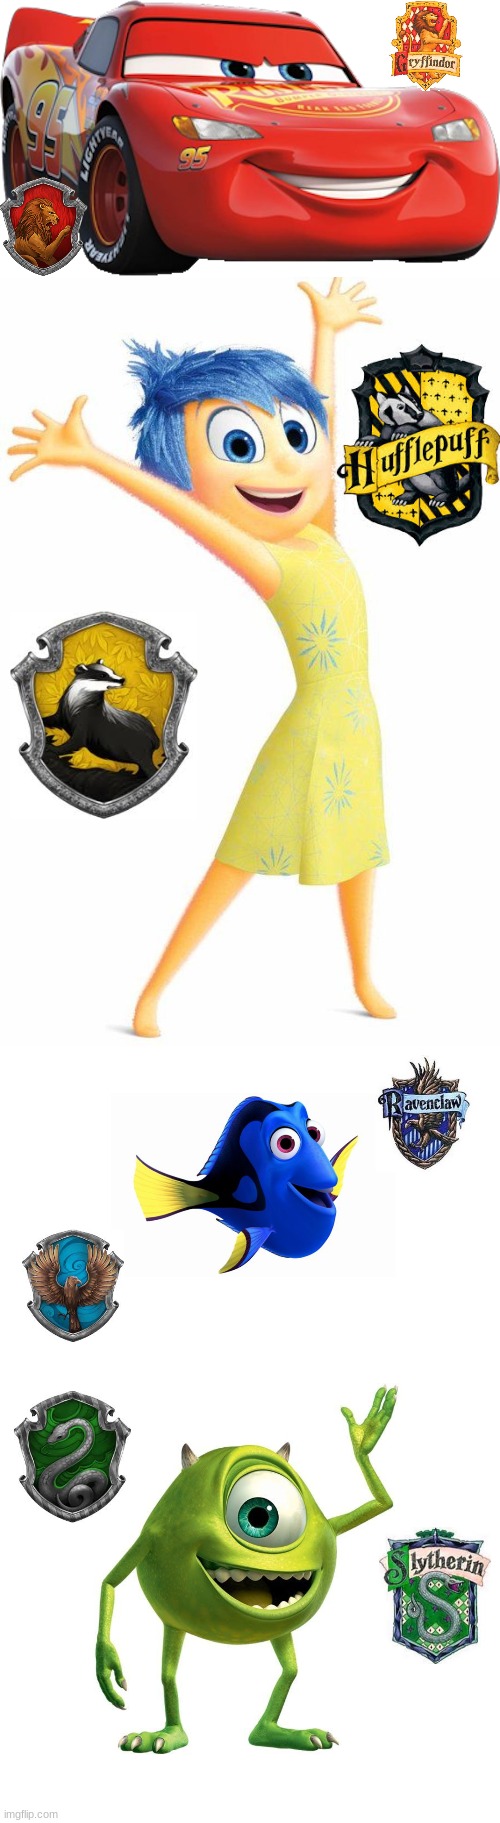 Hogwarts: Pixar edition | image tagged in memes,pixar,walt disney,disney,hogwarts,movies | made w/ Imgflip meme maker